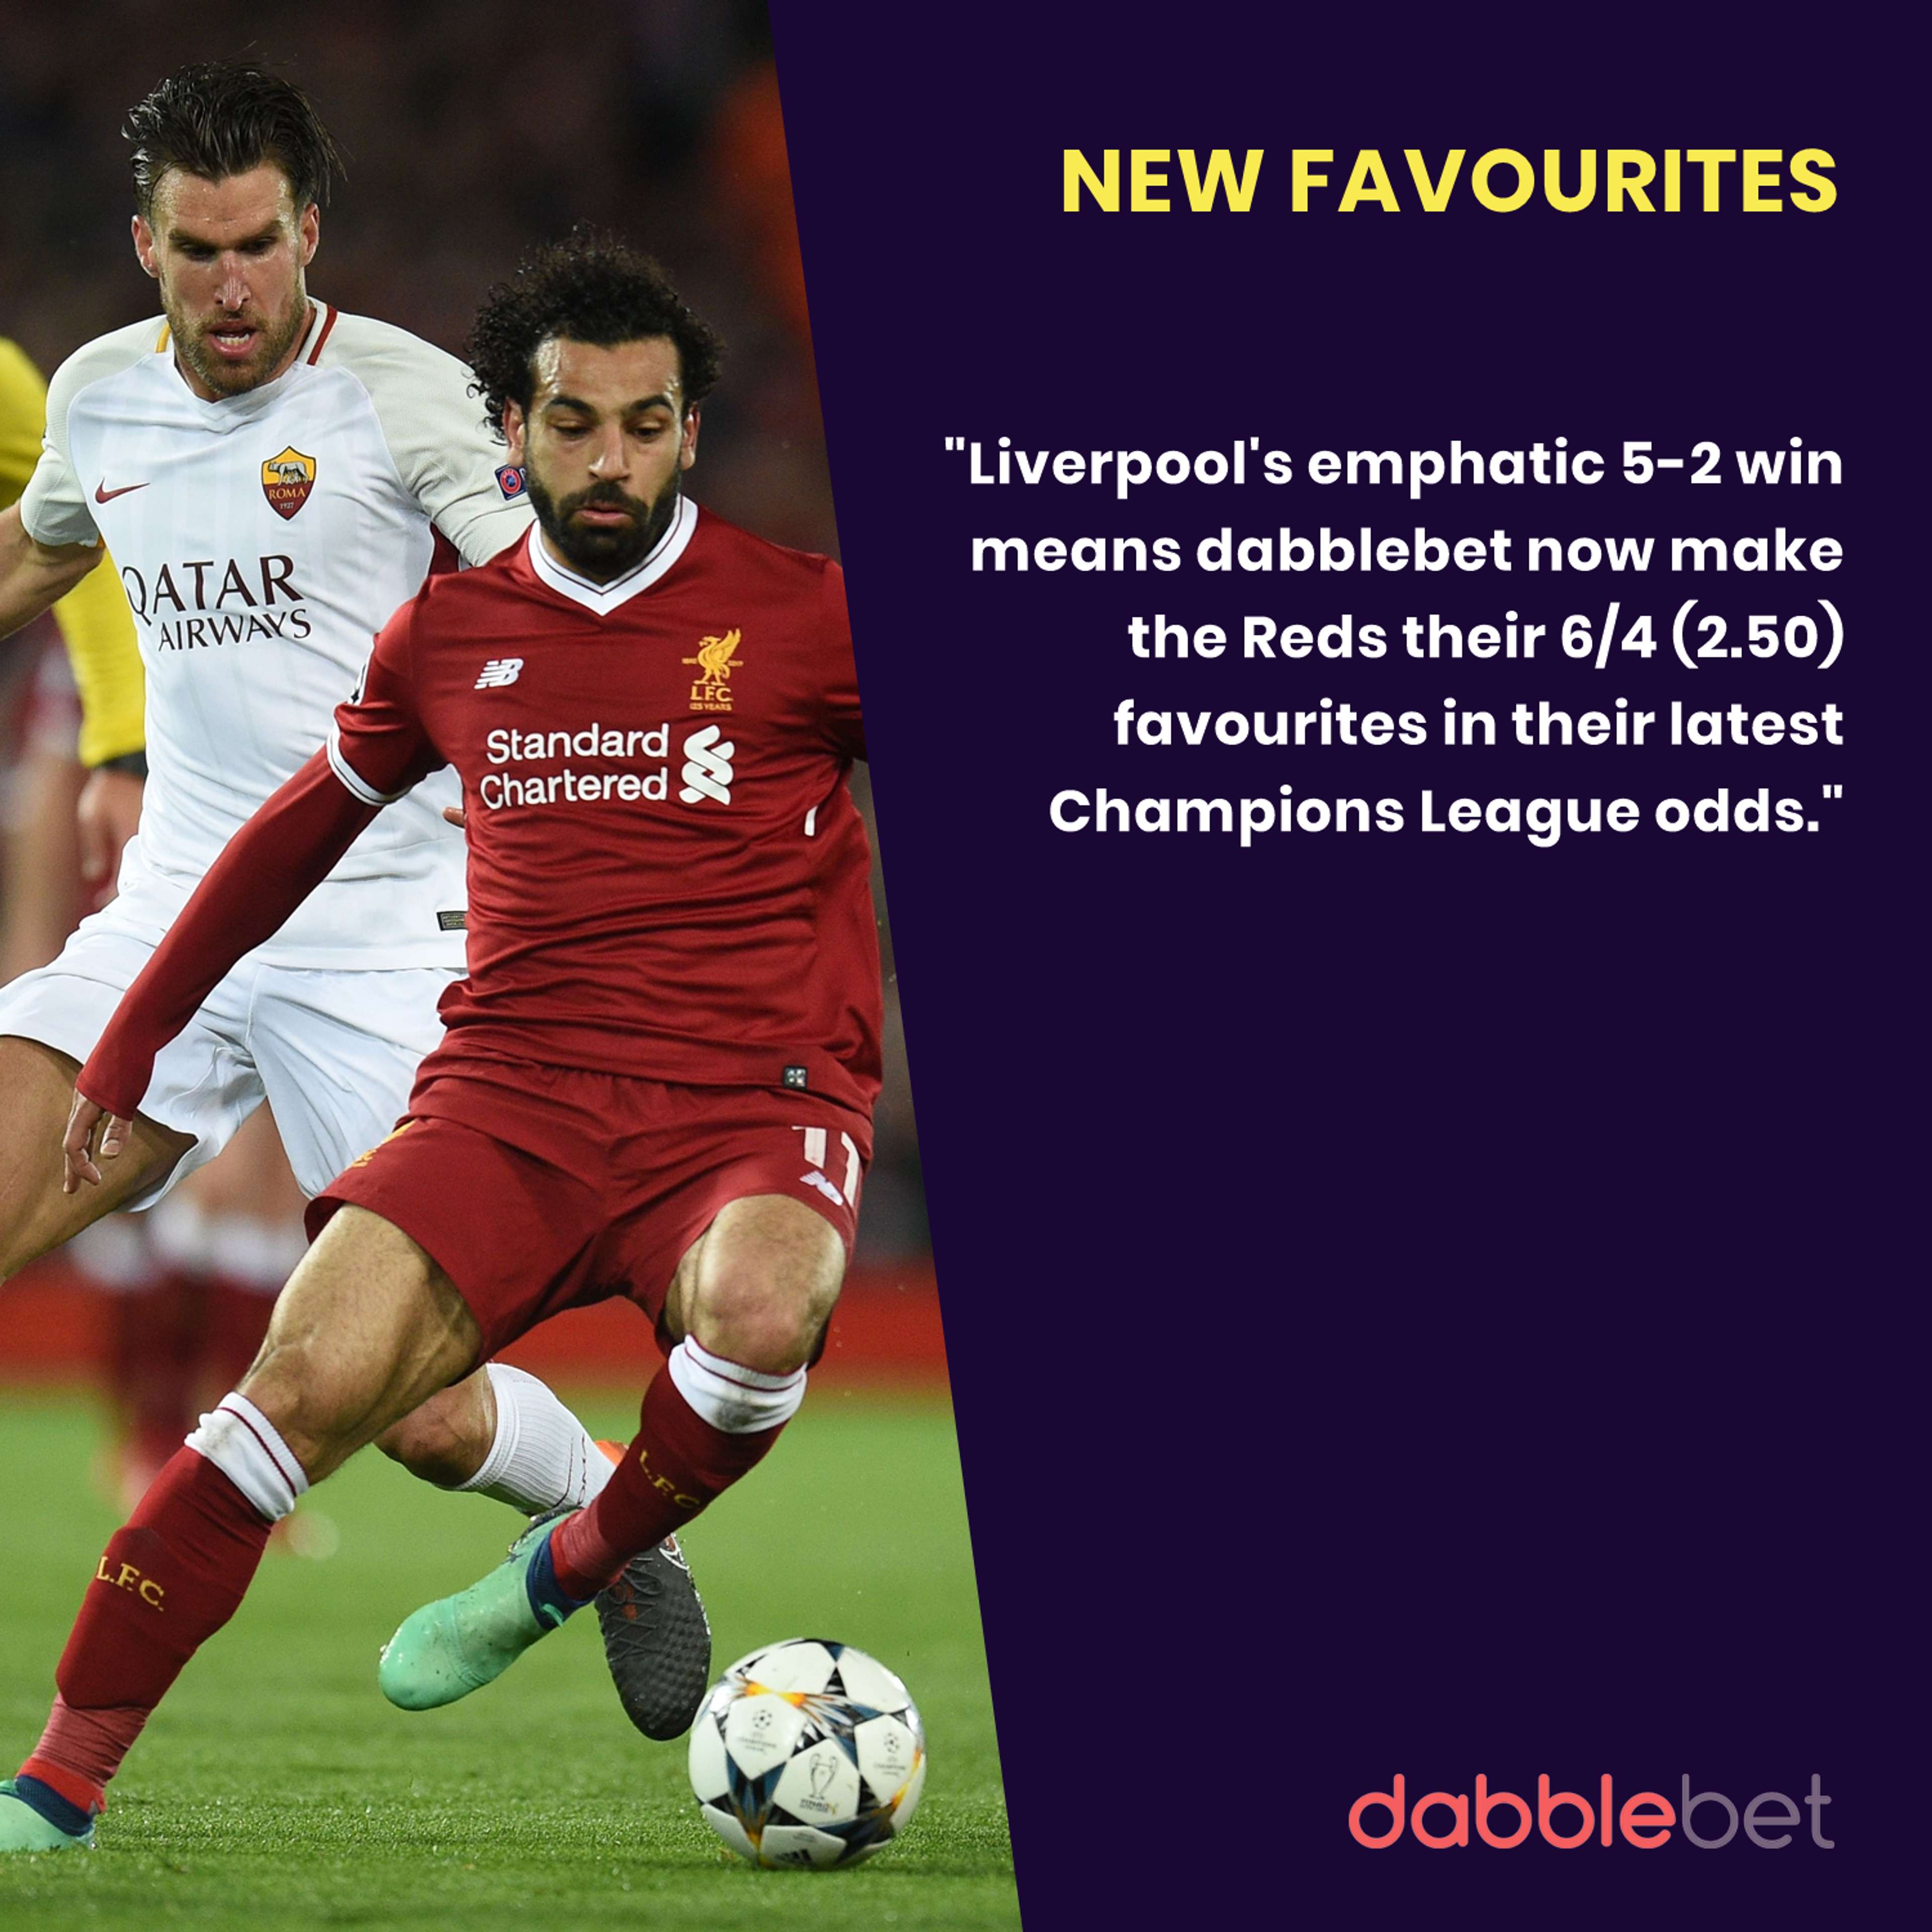 Liverpool v Roma dabblebet latest odds